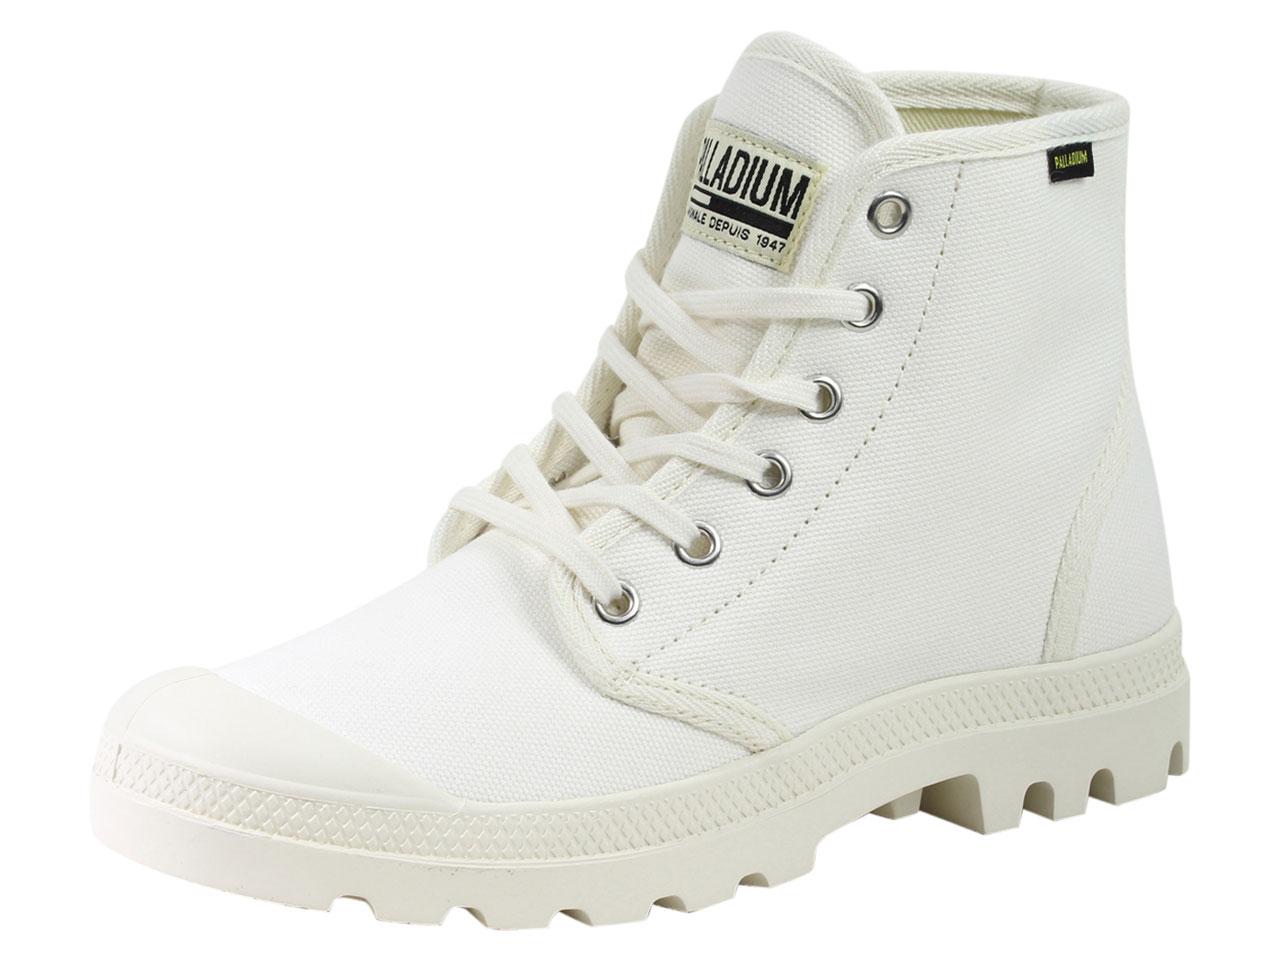 Palladium Men's Pampa Hi Originale Chukka Boots Shoes - White - 7.5 D(M) US/9 B(M) US